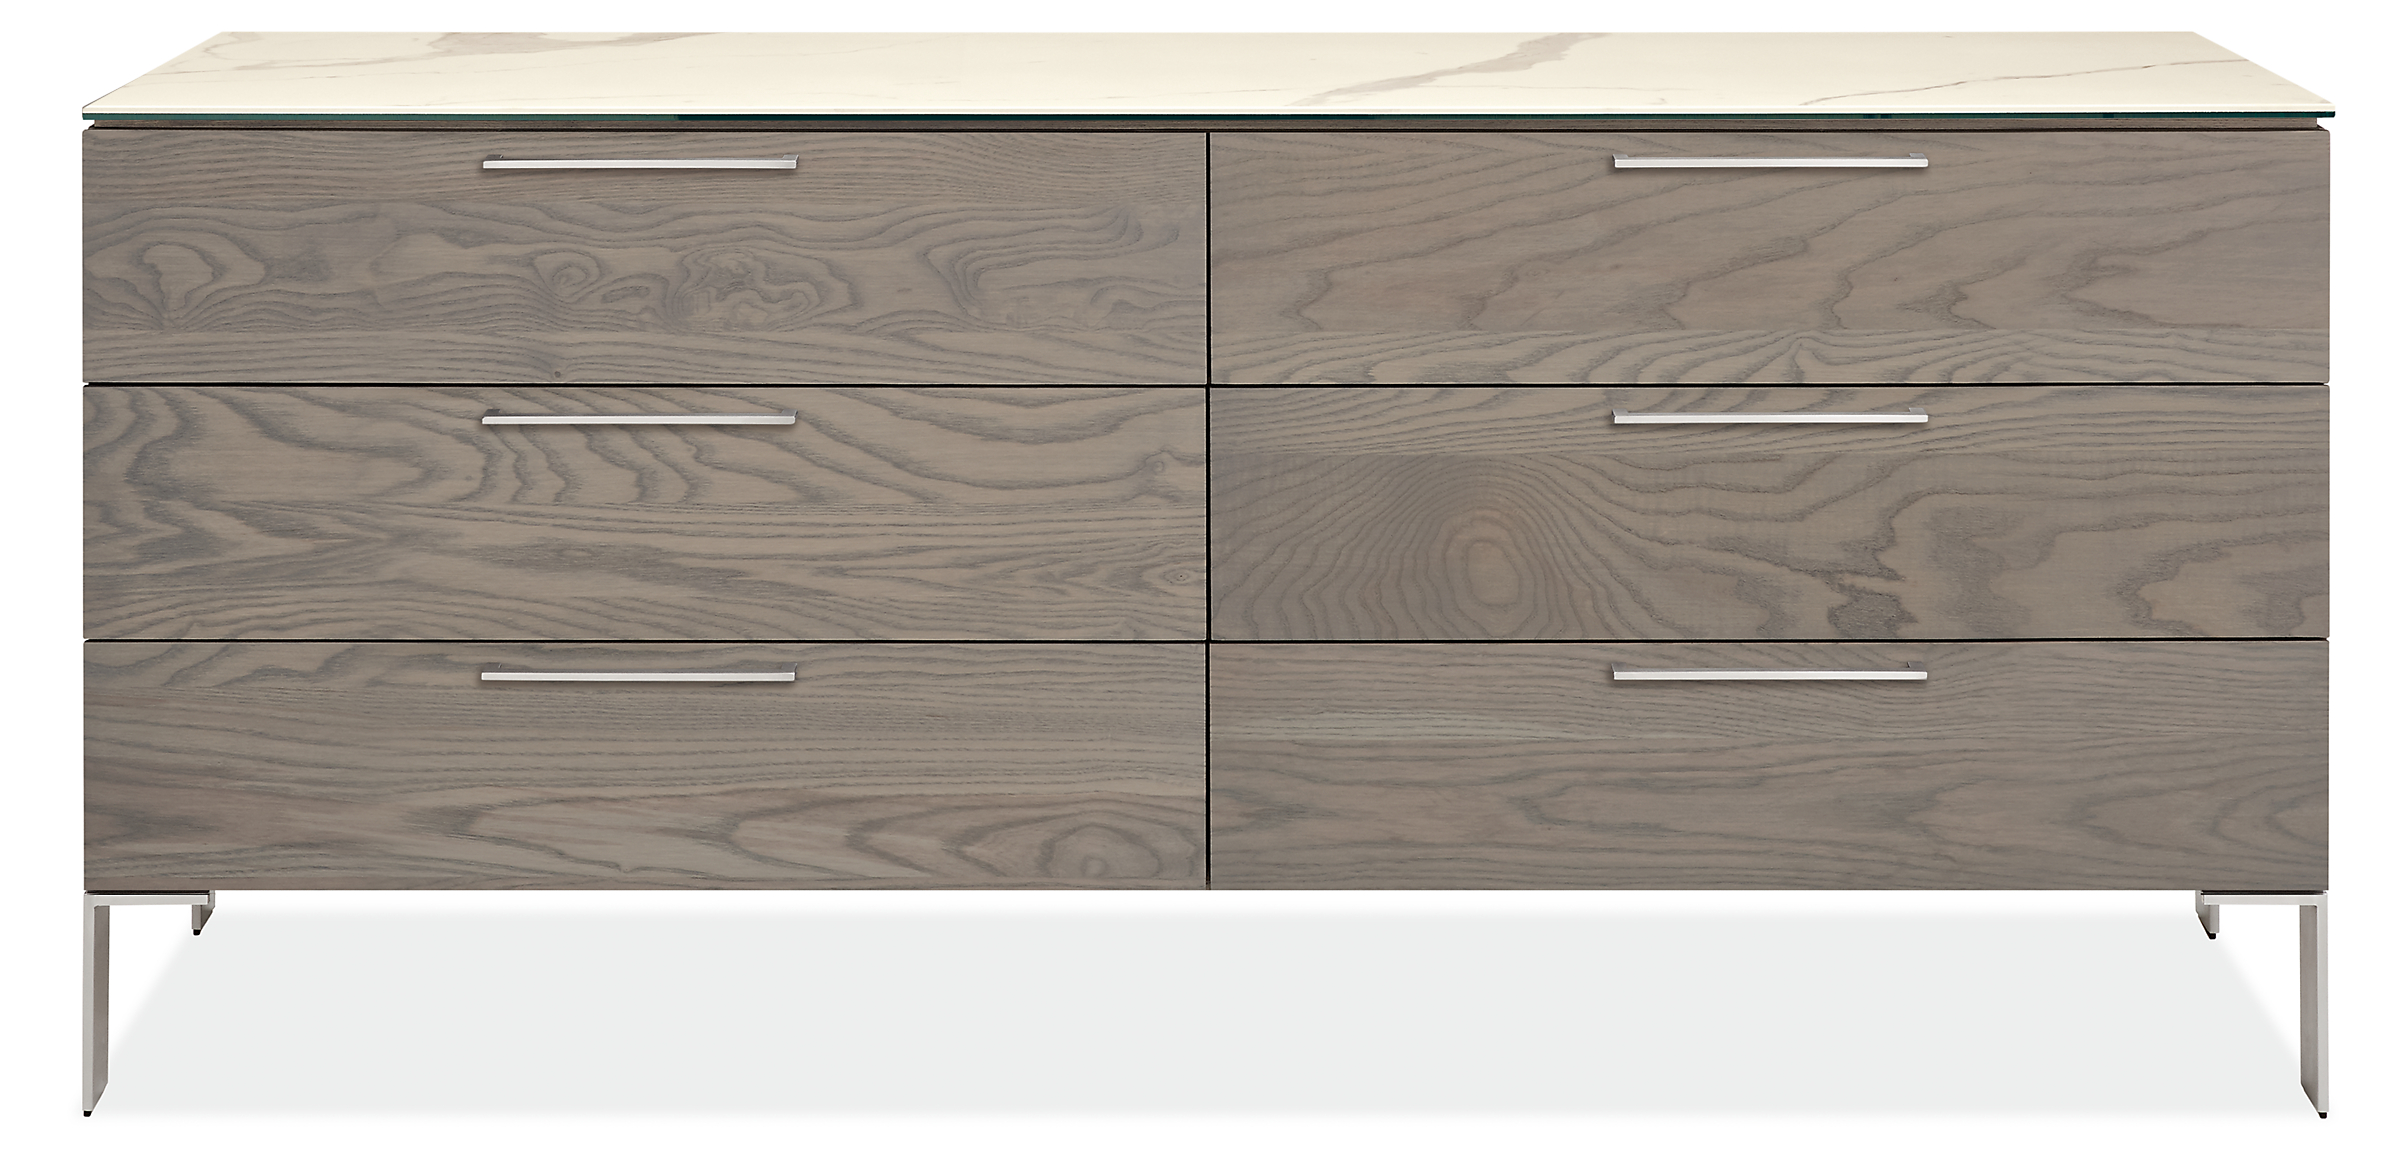 Kenwood 72w 20d 33h Six-Drawer Dresser with Ceramic Top